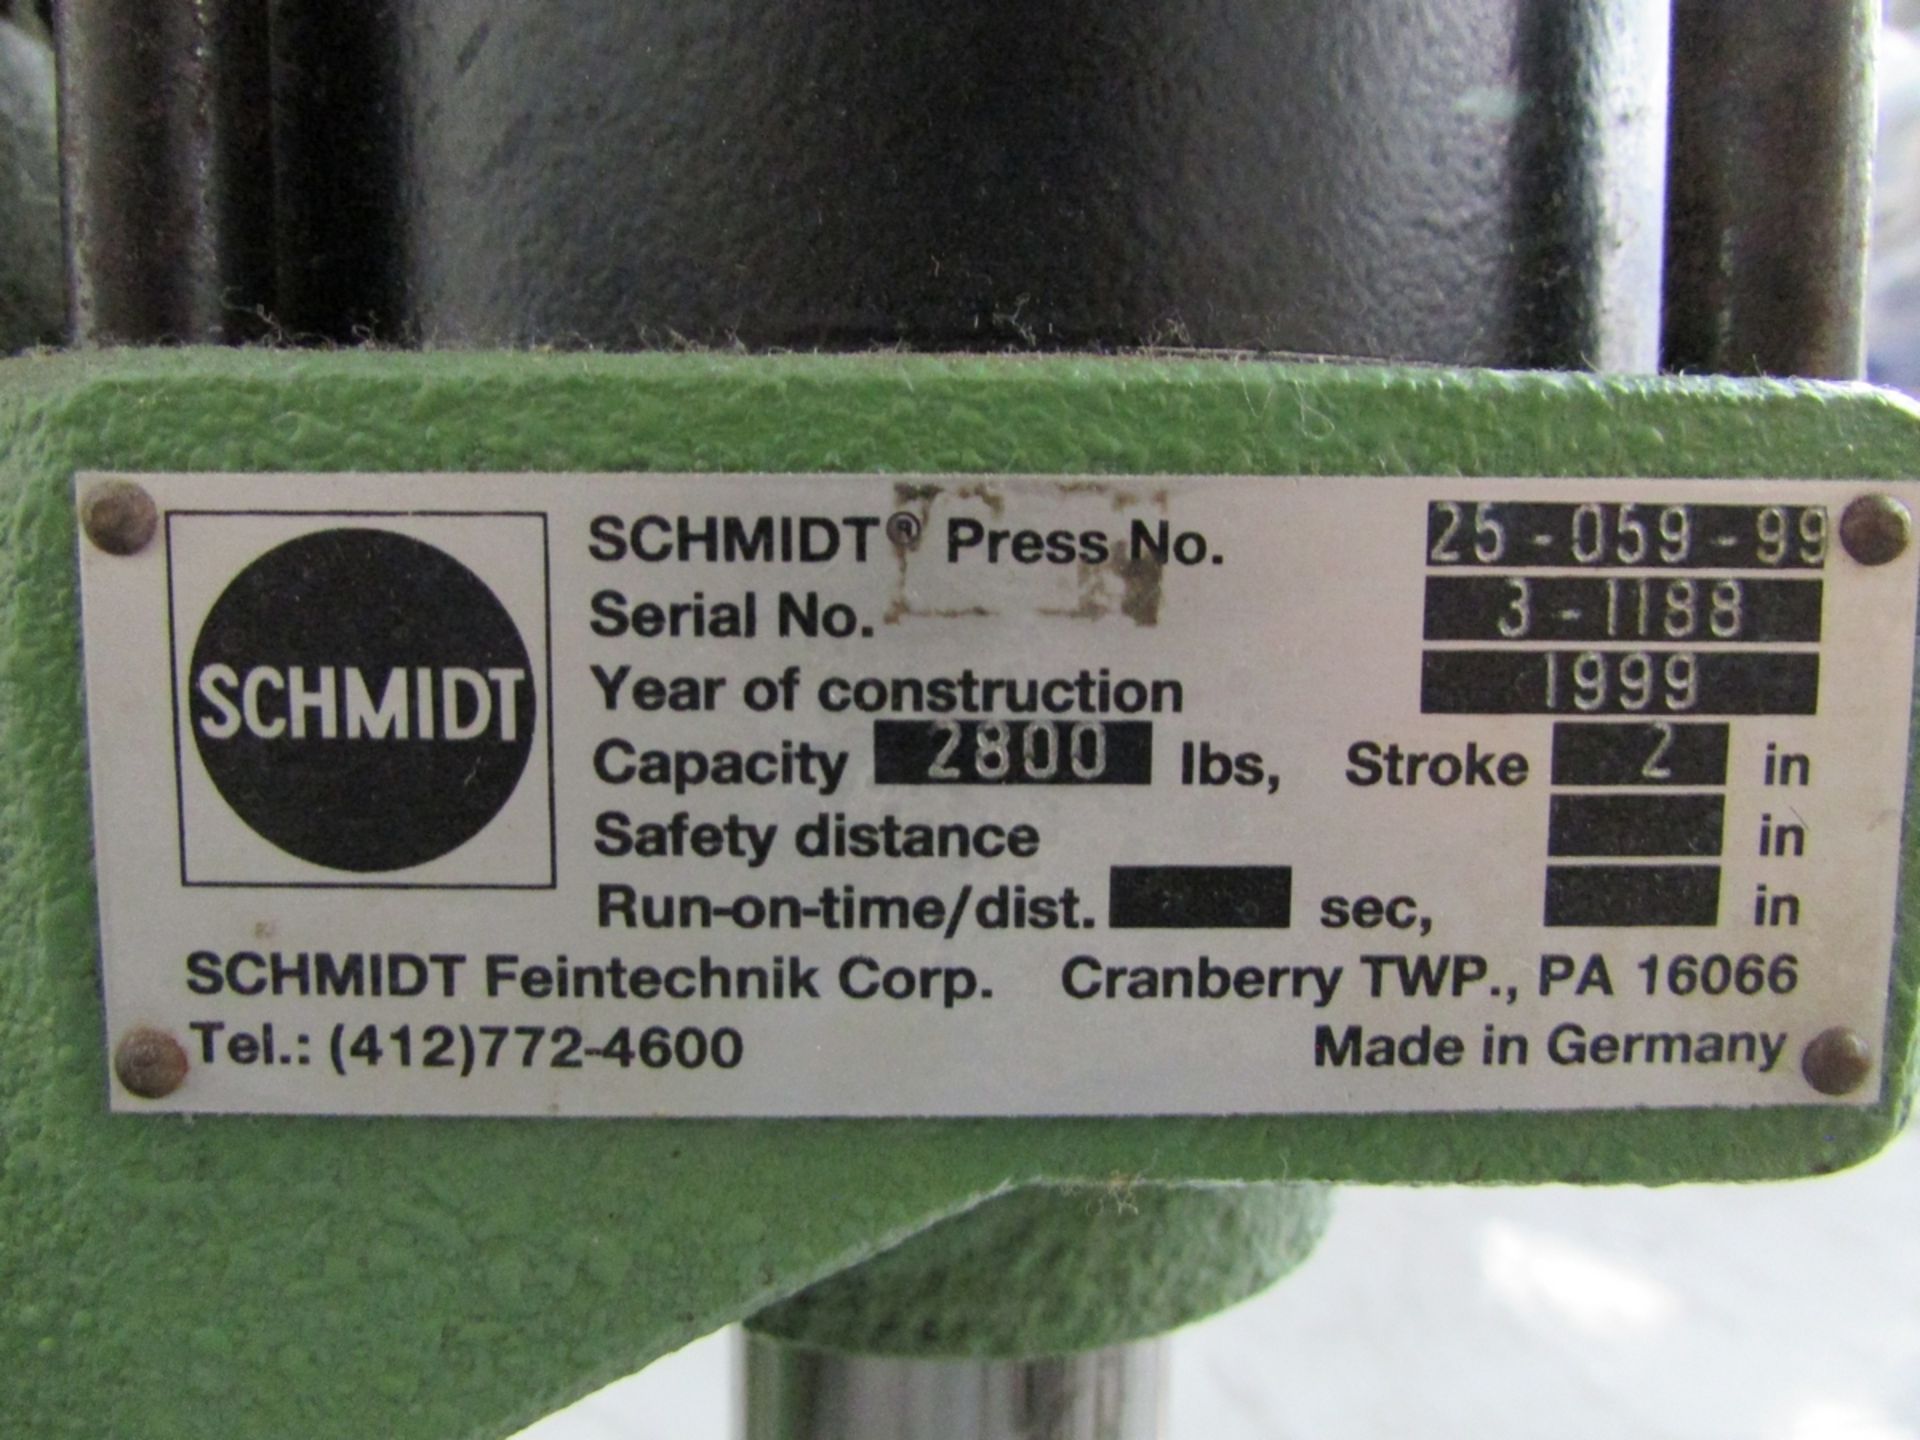 Schmidt 25-059-99 2800 Lb. Pneumatic Assembly Arbor Press (1999) - Image 17 of 18